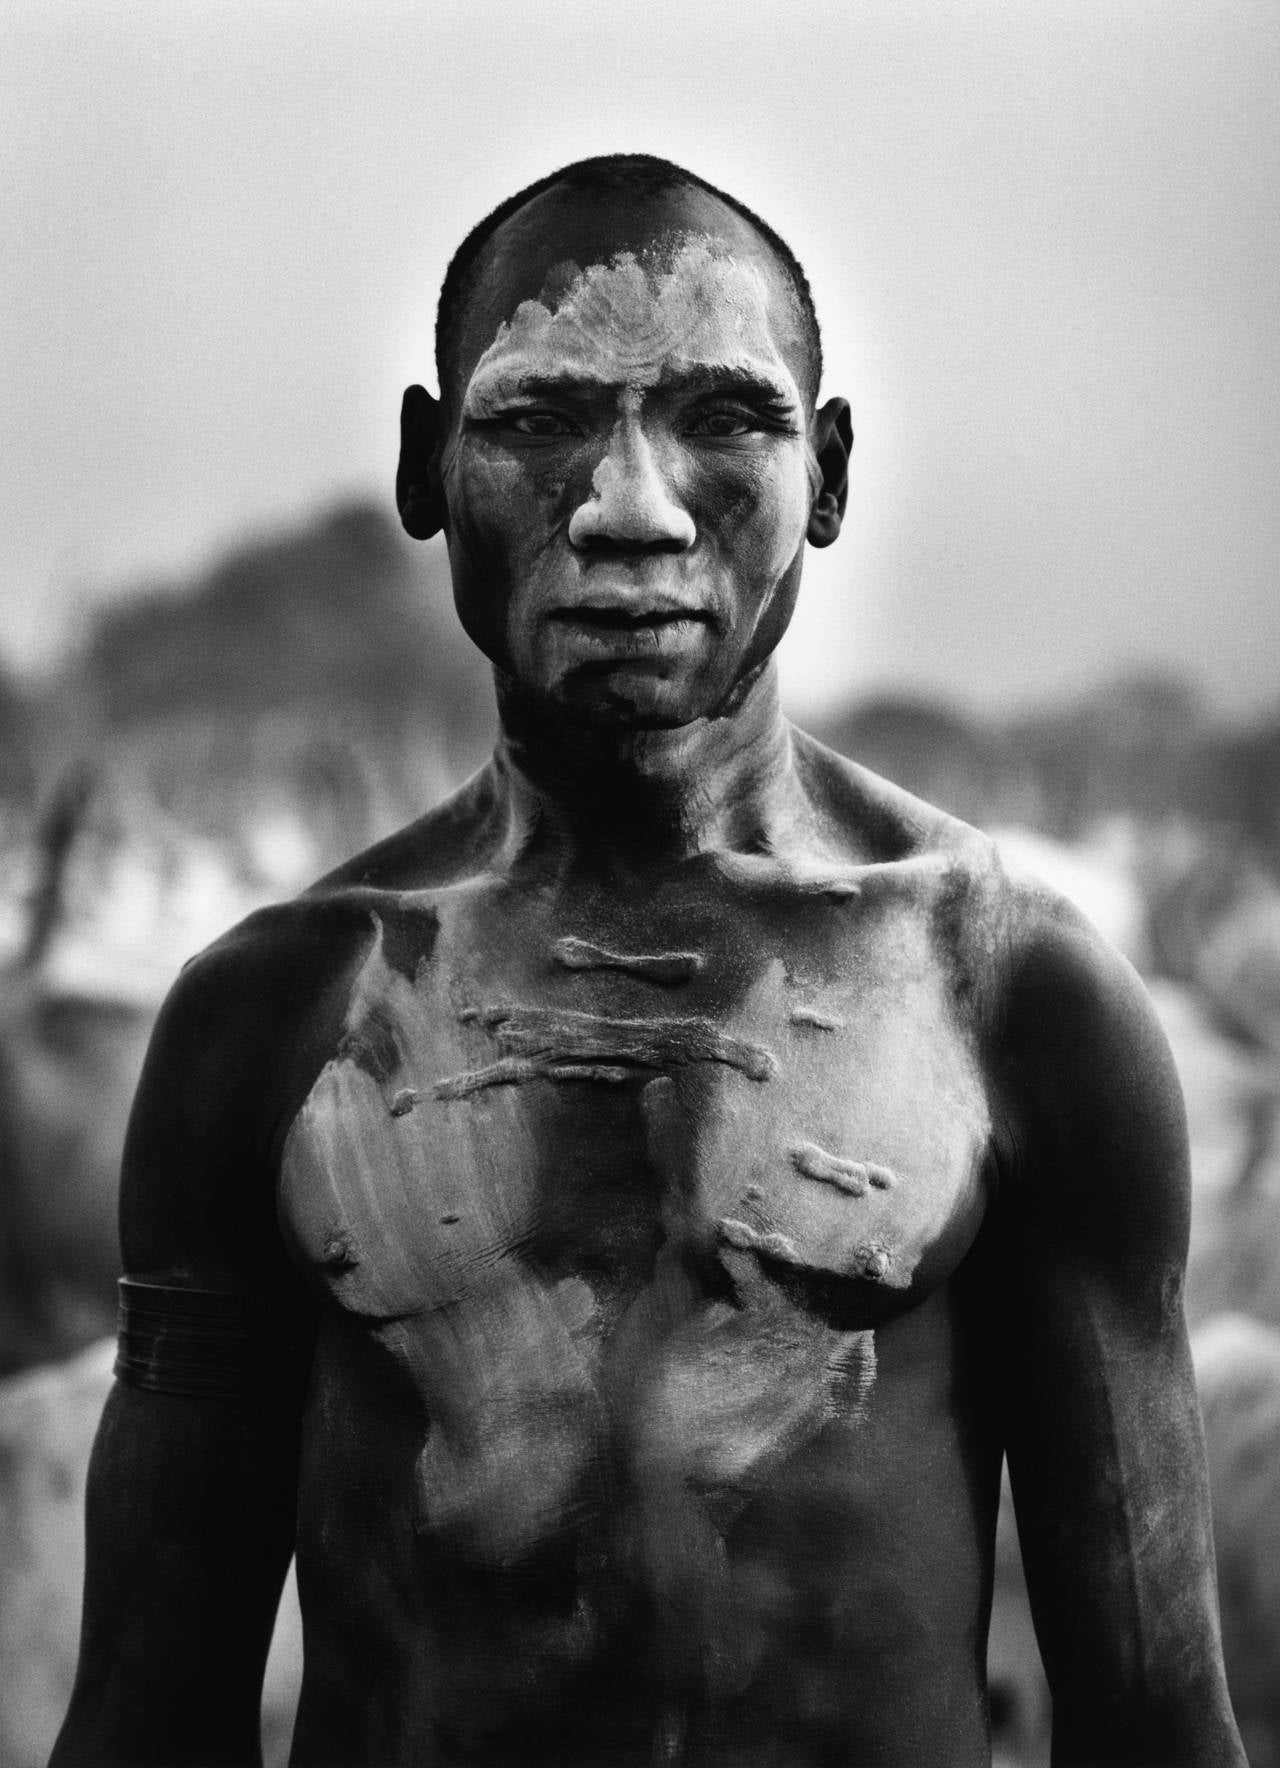 Dinka-Mann, Südsudan, 2006
Sebastião Salgado
Gestempelt mit dem Copyright-Blindstempel des Fotografen
Signiert, rückseitig beschriftet
Silber-Gelatine-Druck
16 x 20 Zoll

Sebastião Salgado (geb. 1944) ist einer der berühmtesten Fotojournalisten der